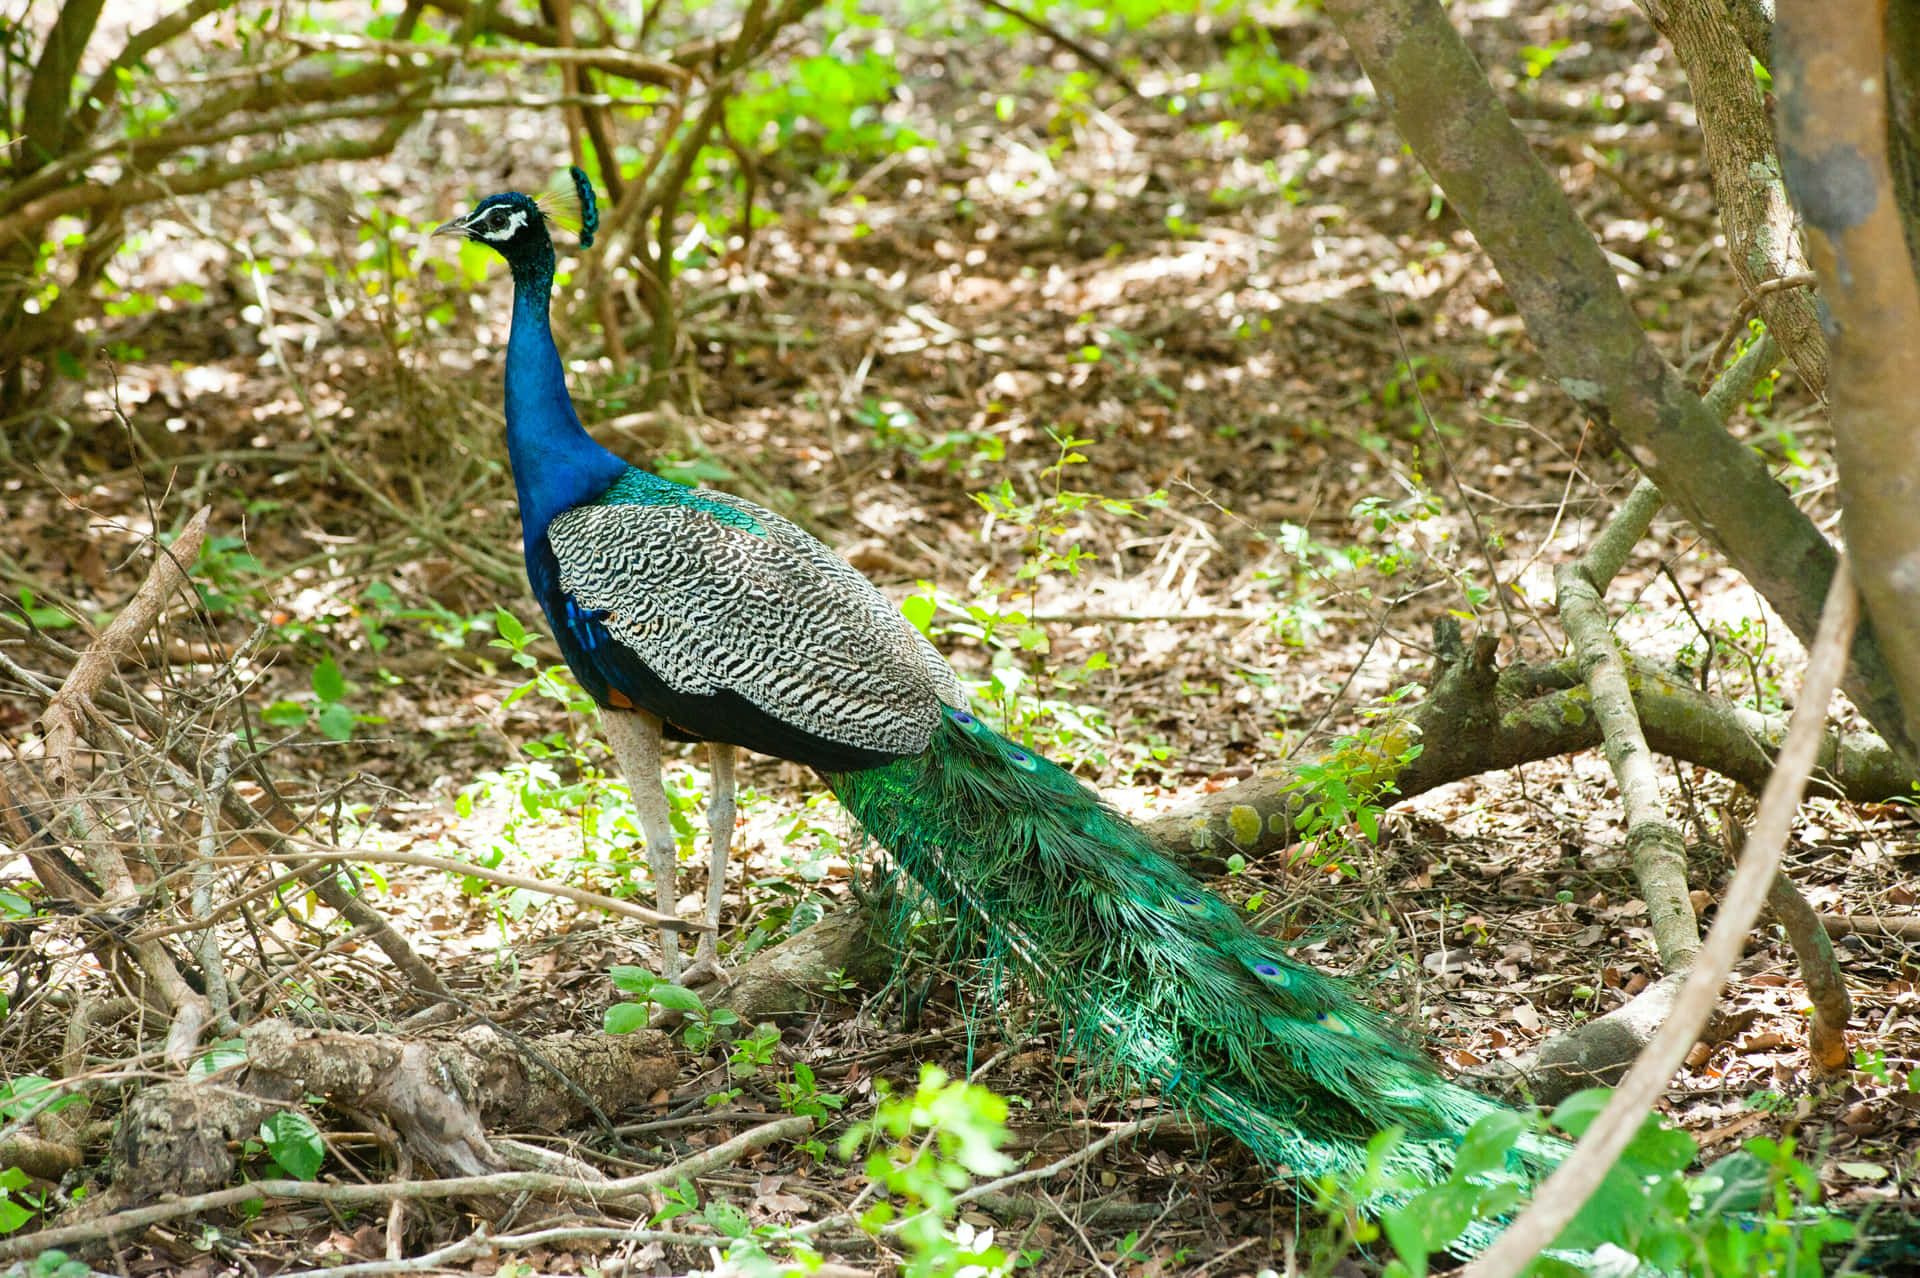 Brilliant colors of a majestic peacock.